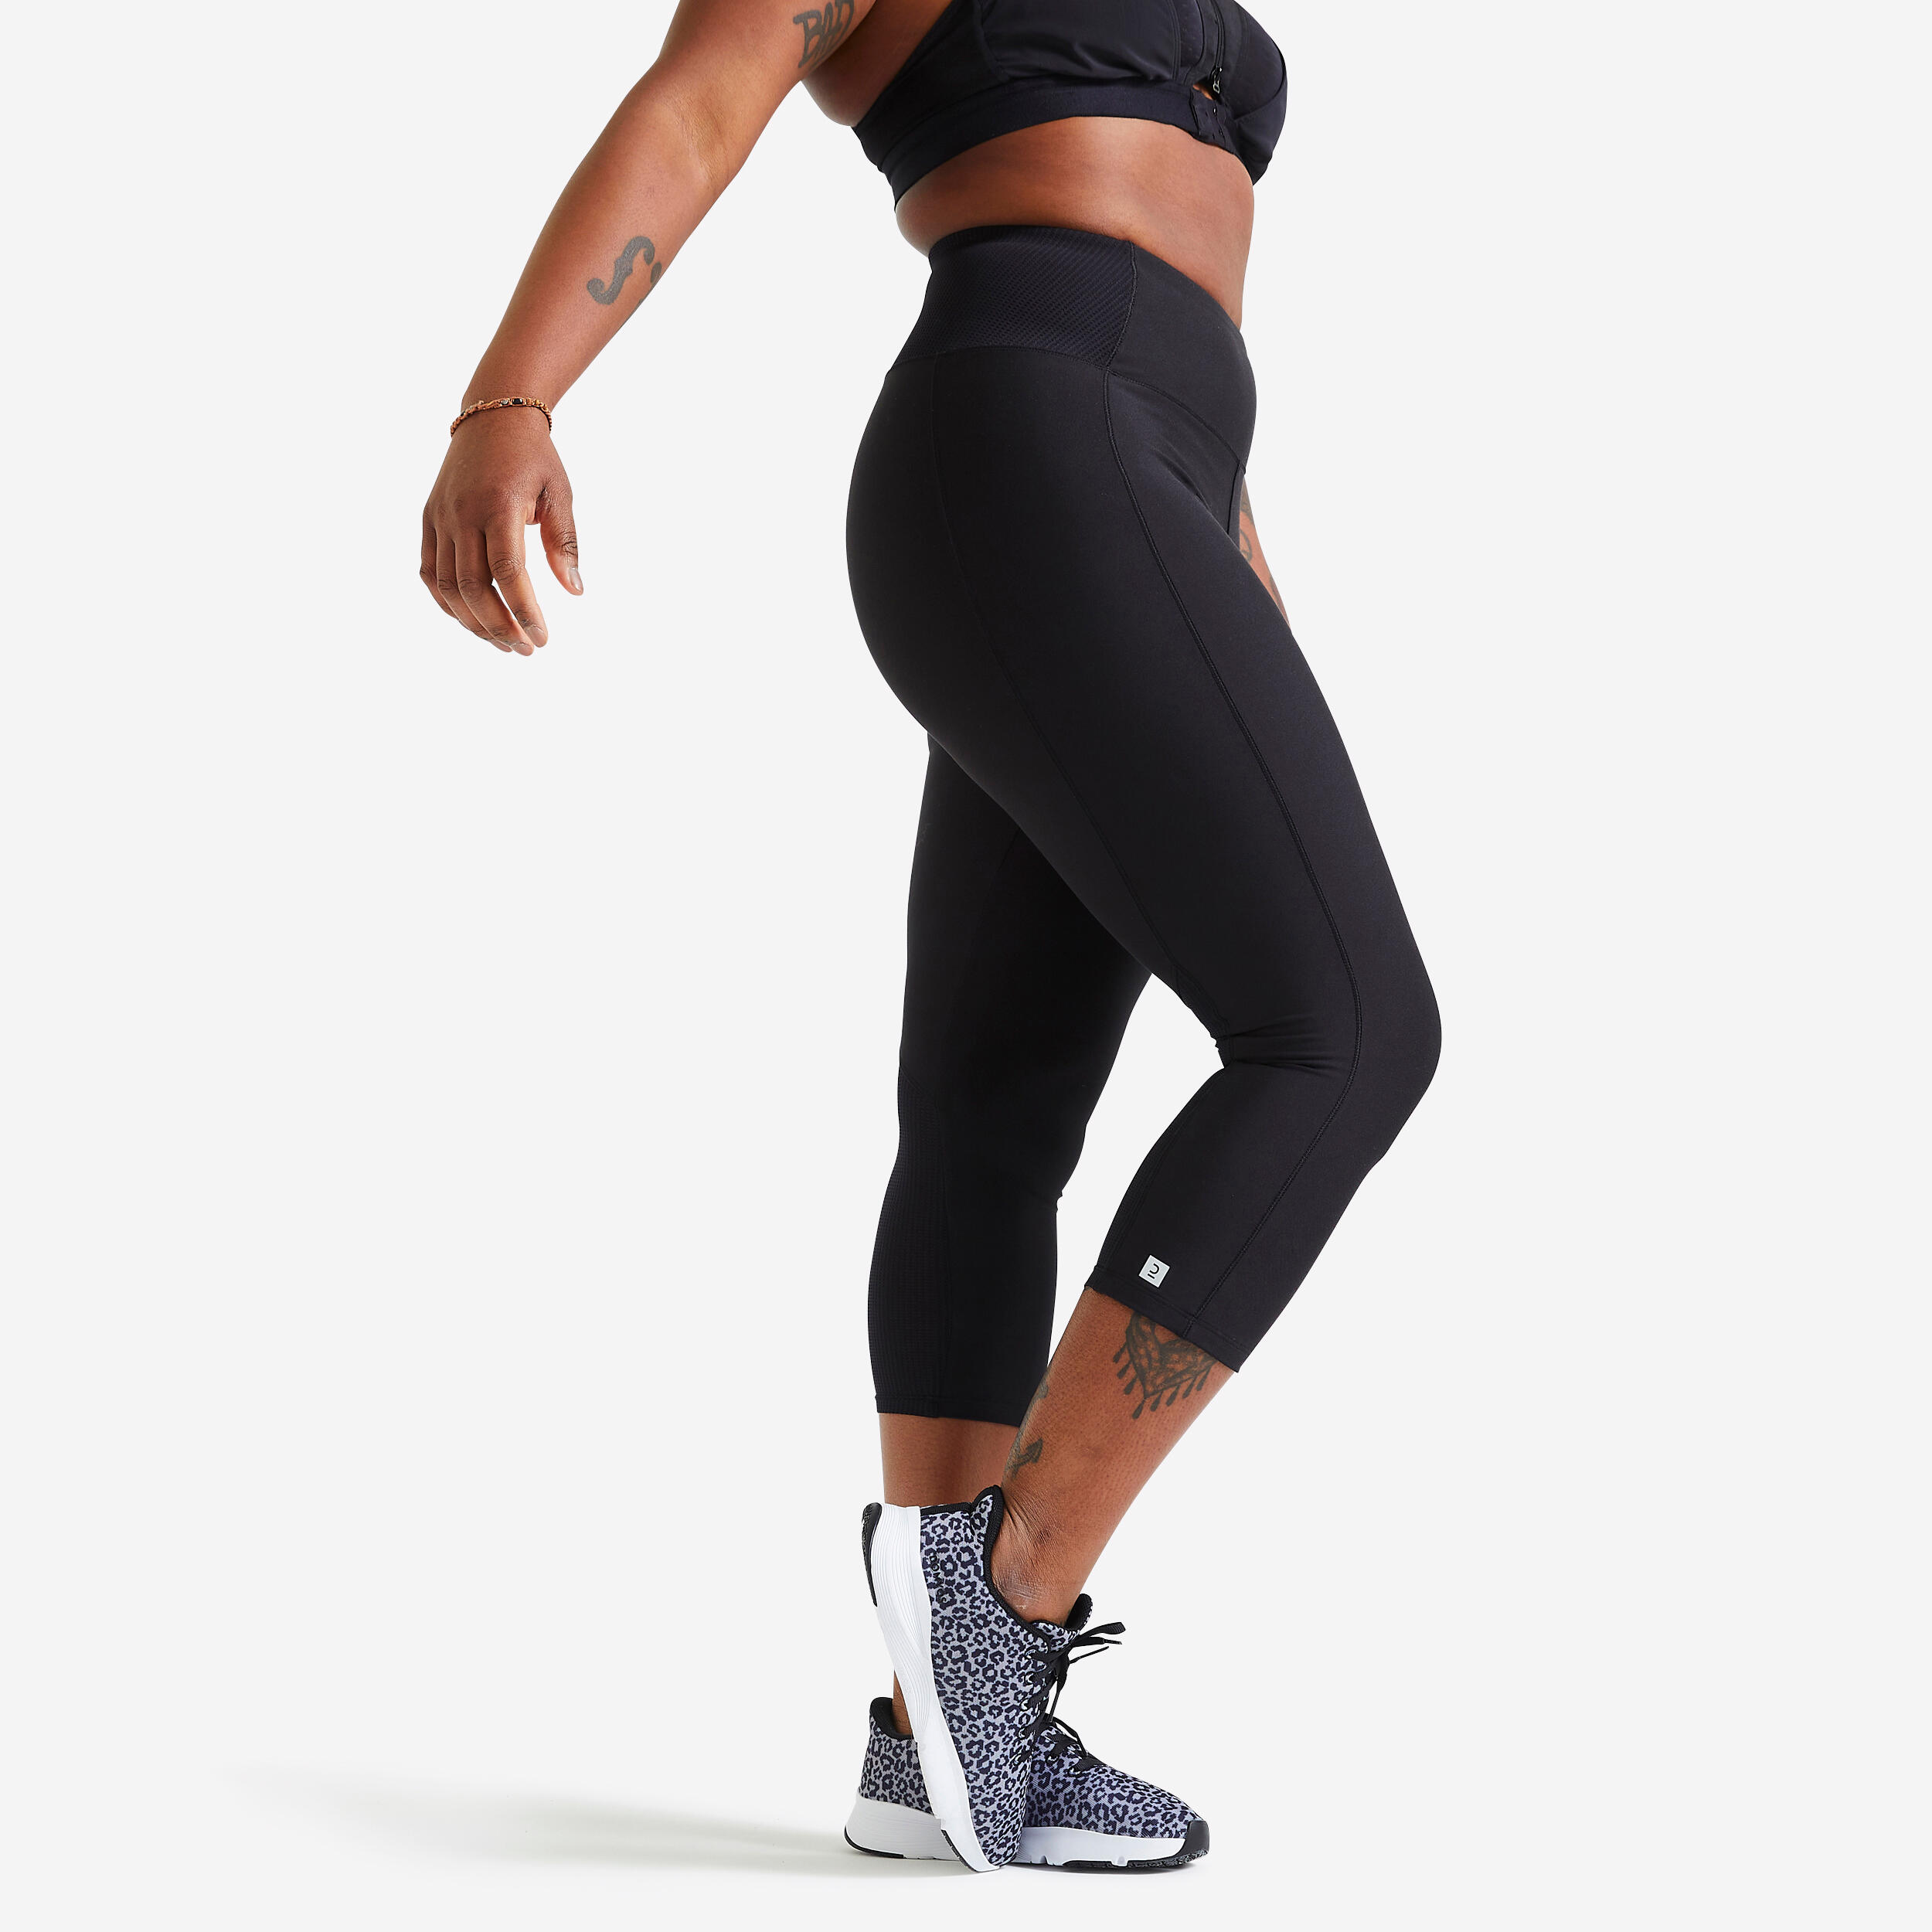 DOMYOS Women's Fitness Cardio Short Leggings with Phone Pocket - Black